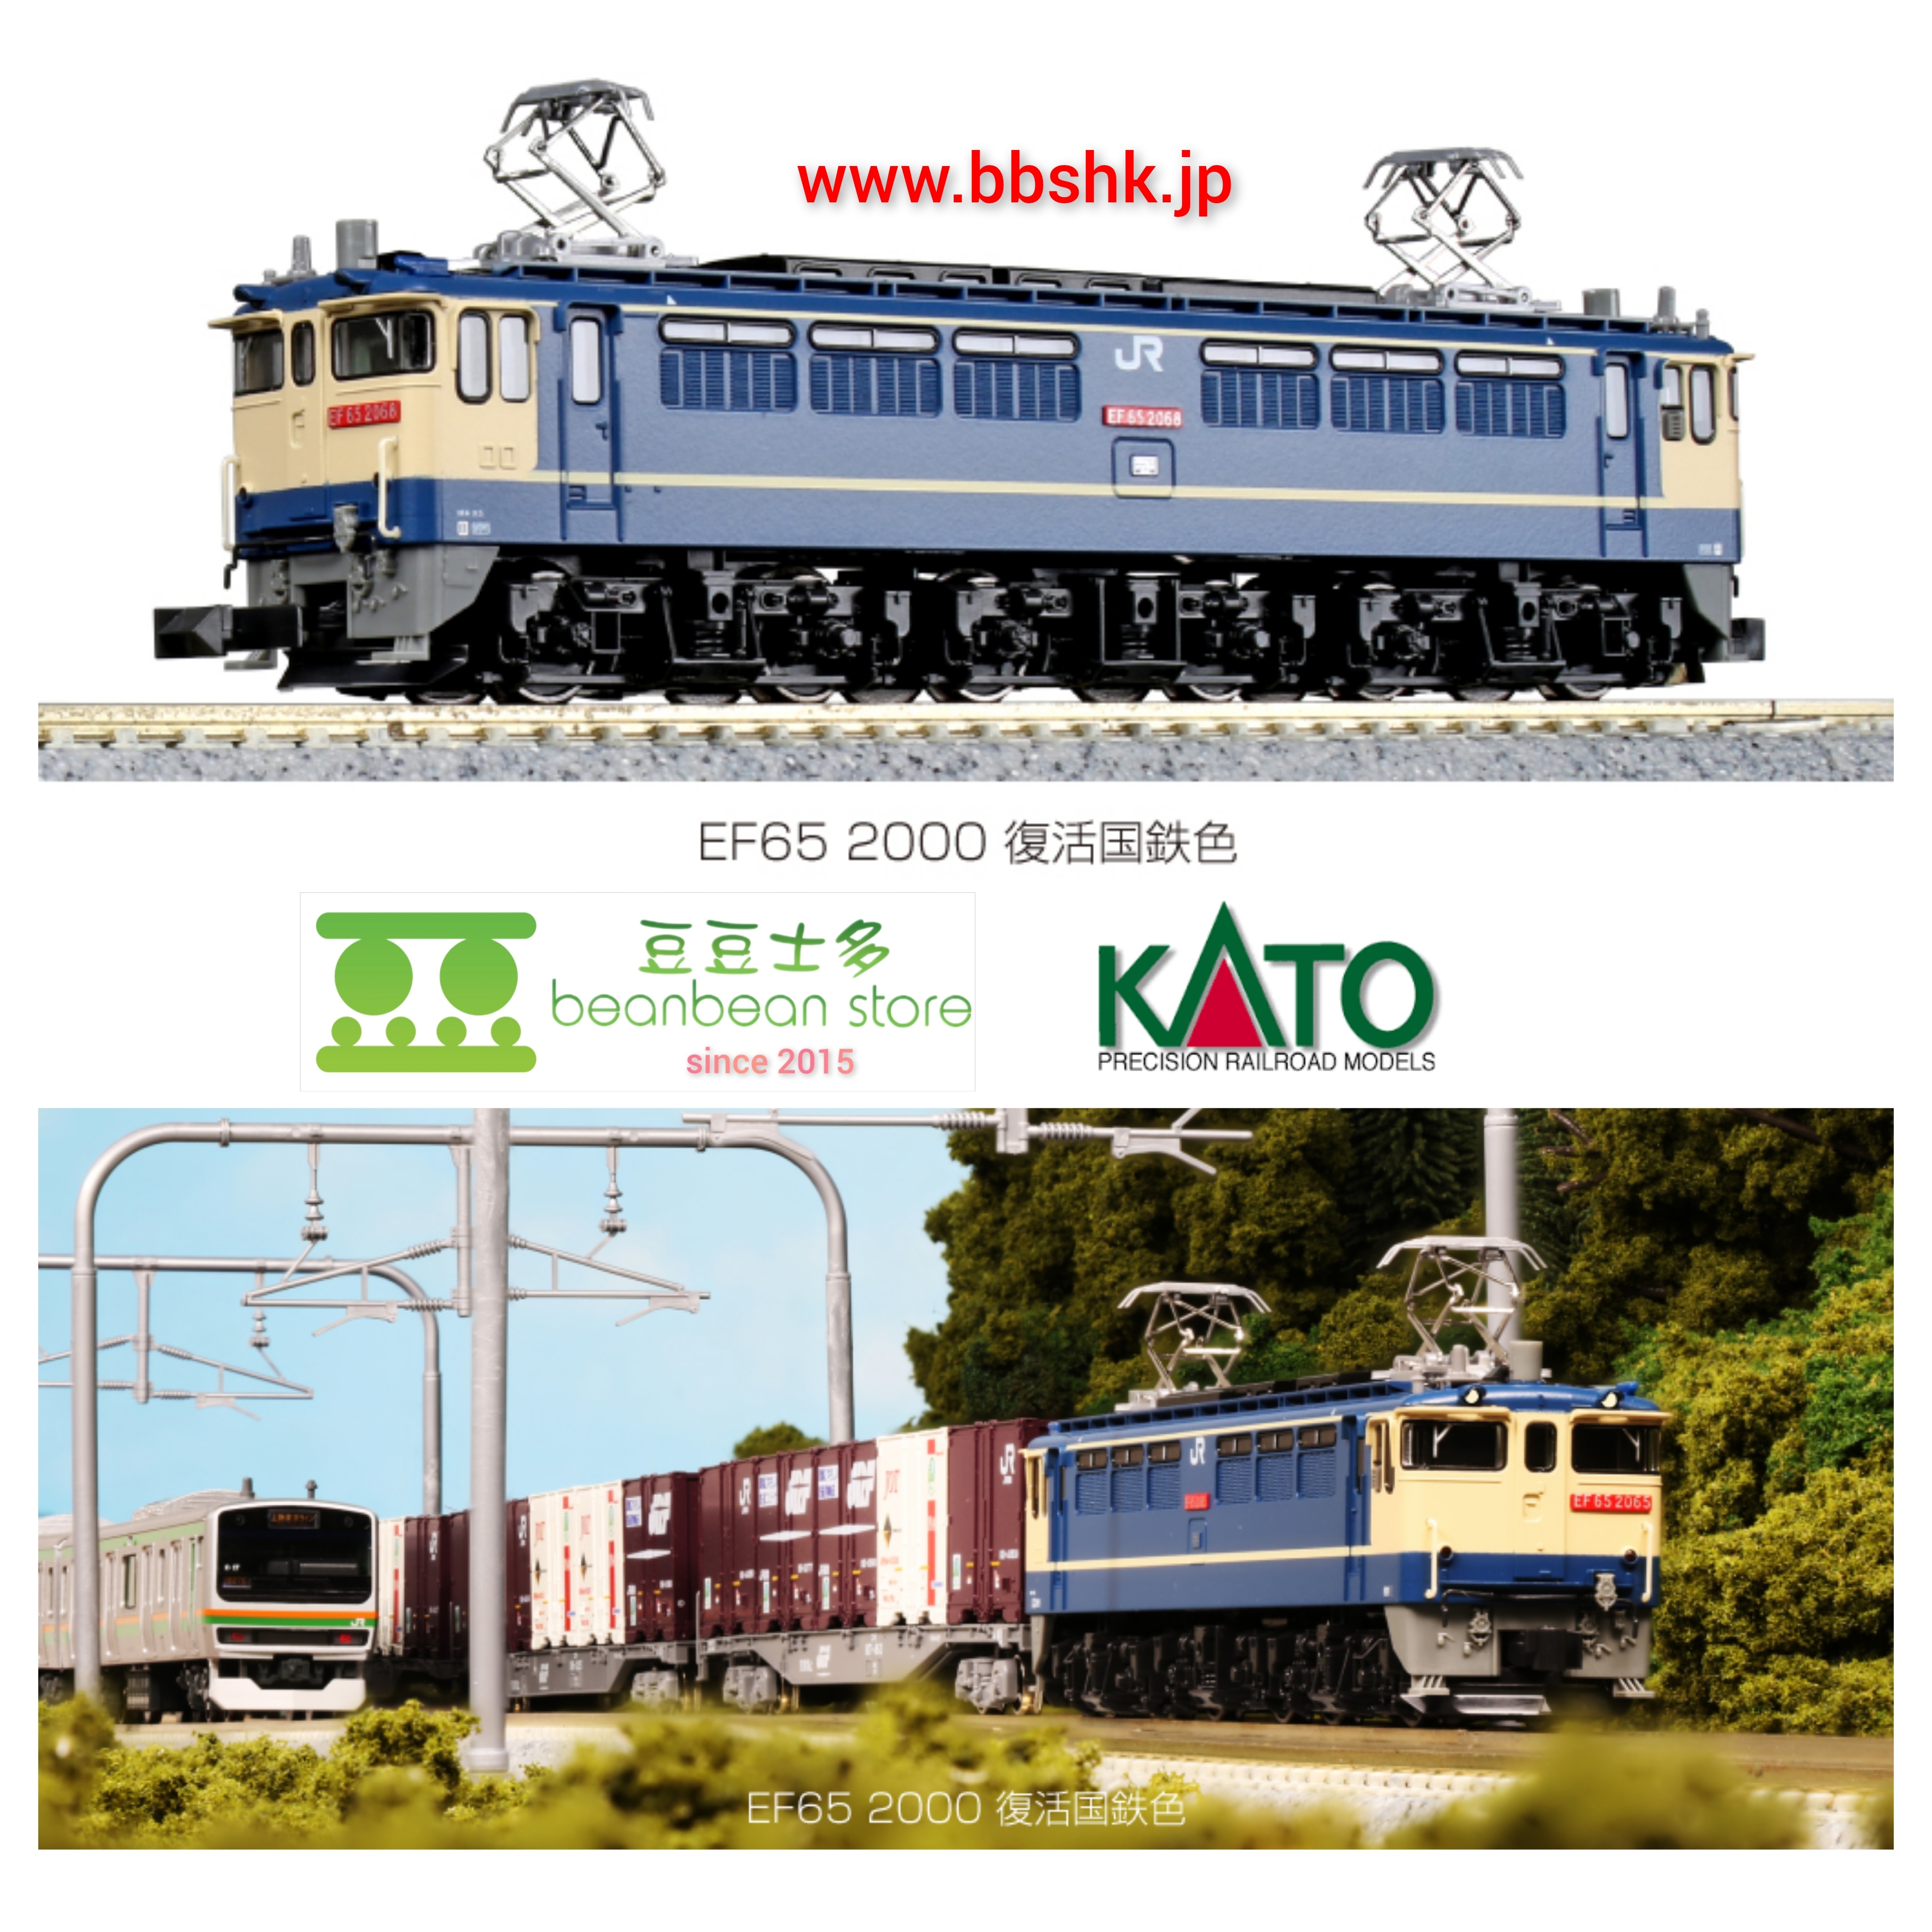 KATO 3061-7 EF65 2000 復活国鉄色